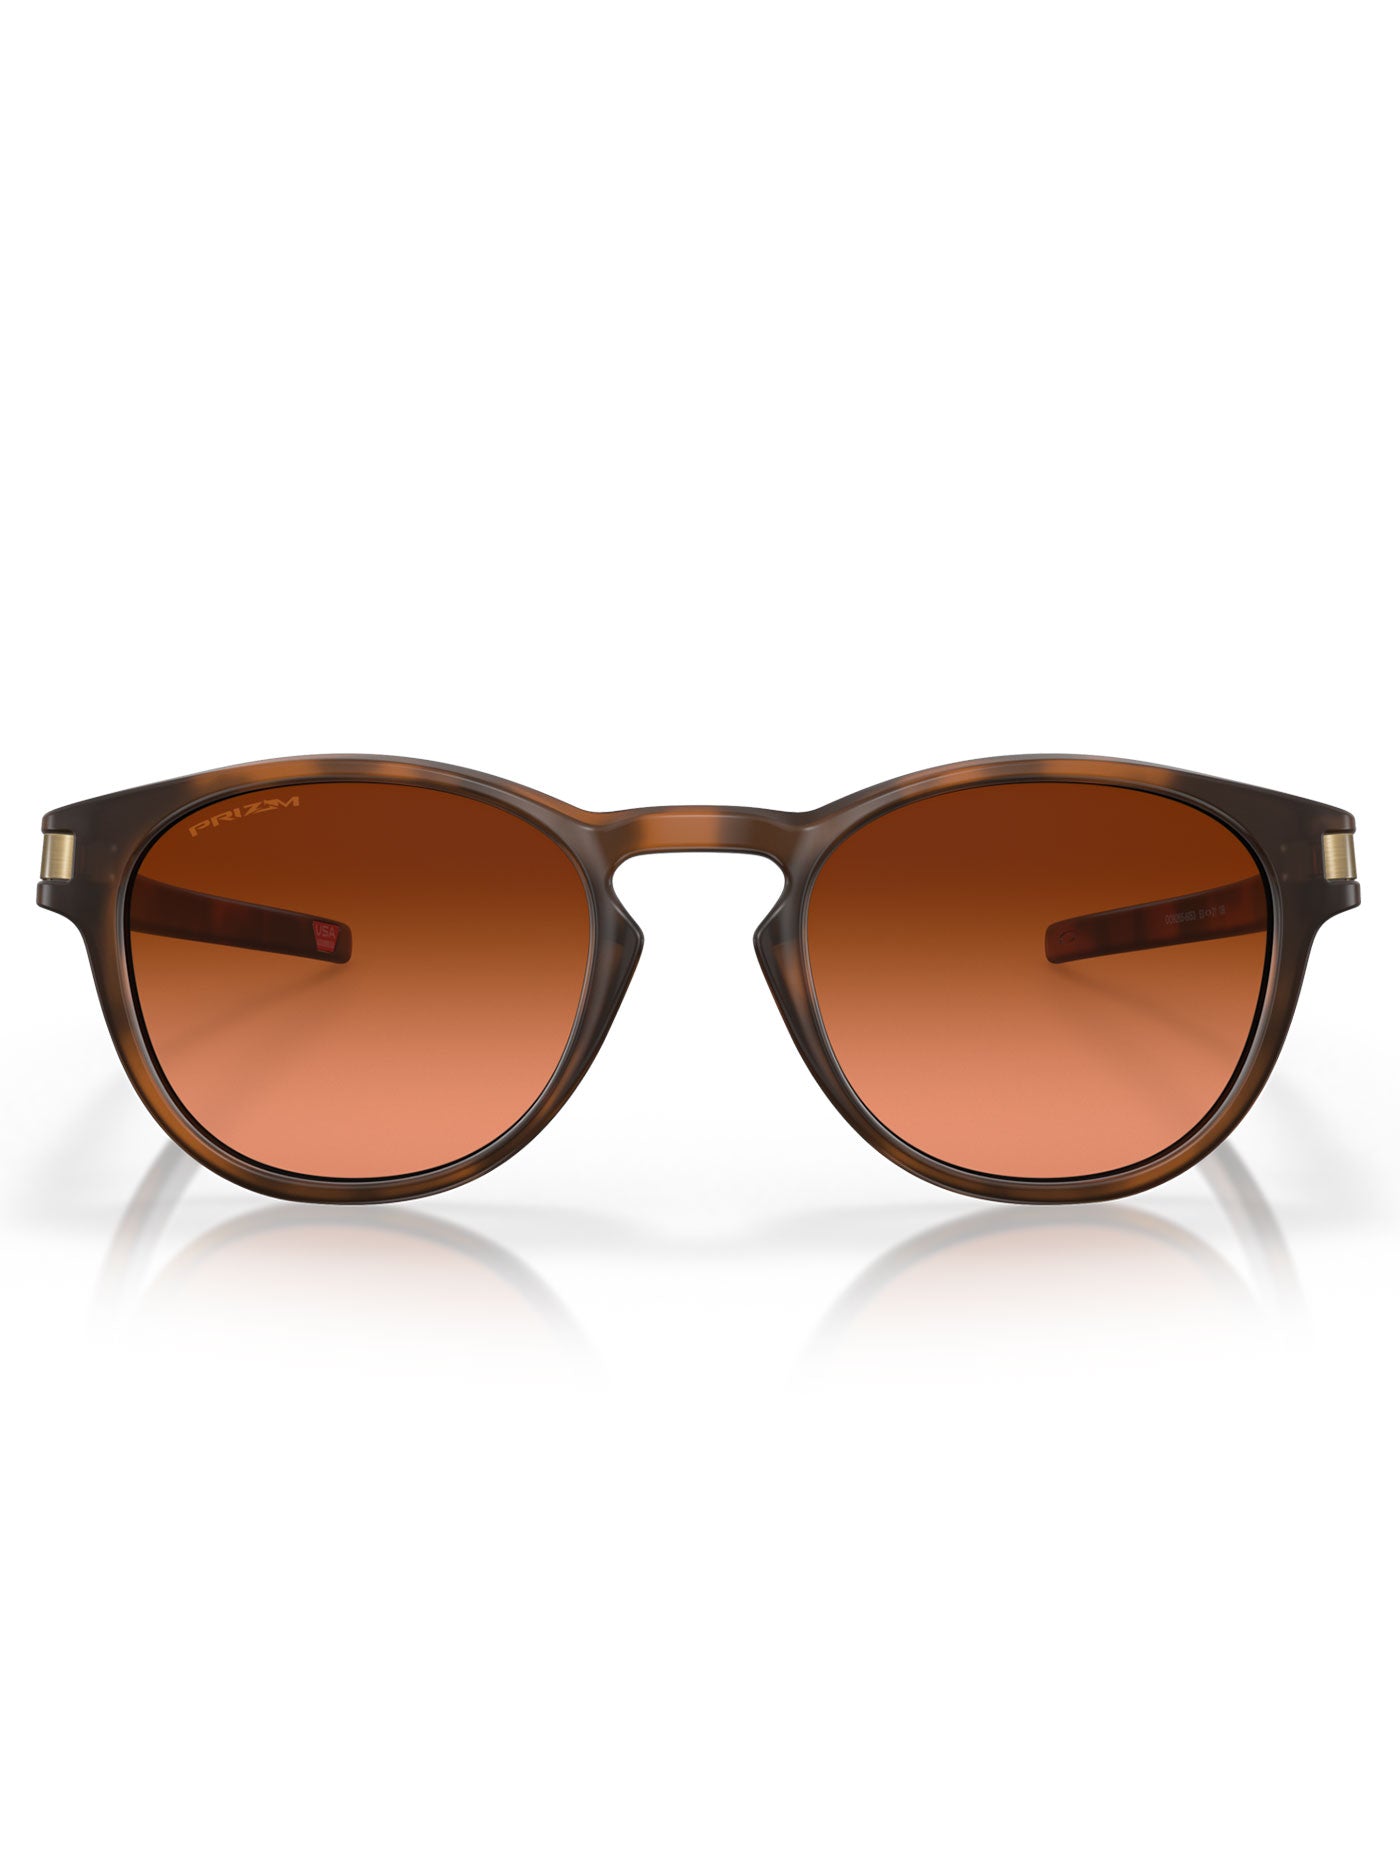 Oakley Latch Brown Tortoise/Prizm Brown Gradient Sunglasses